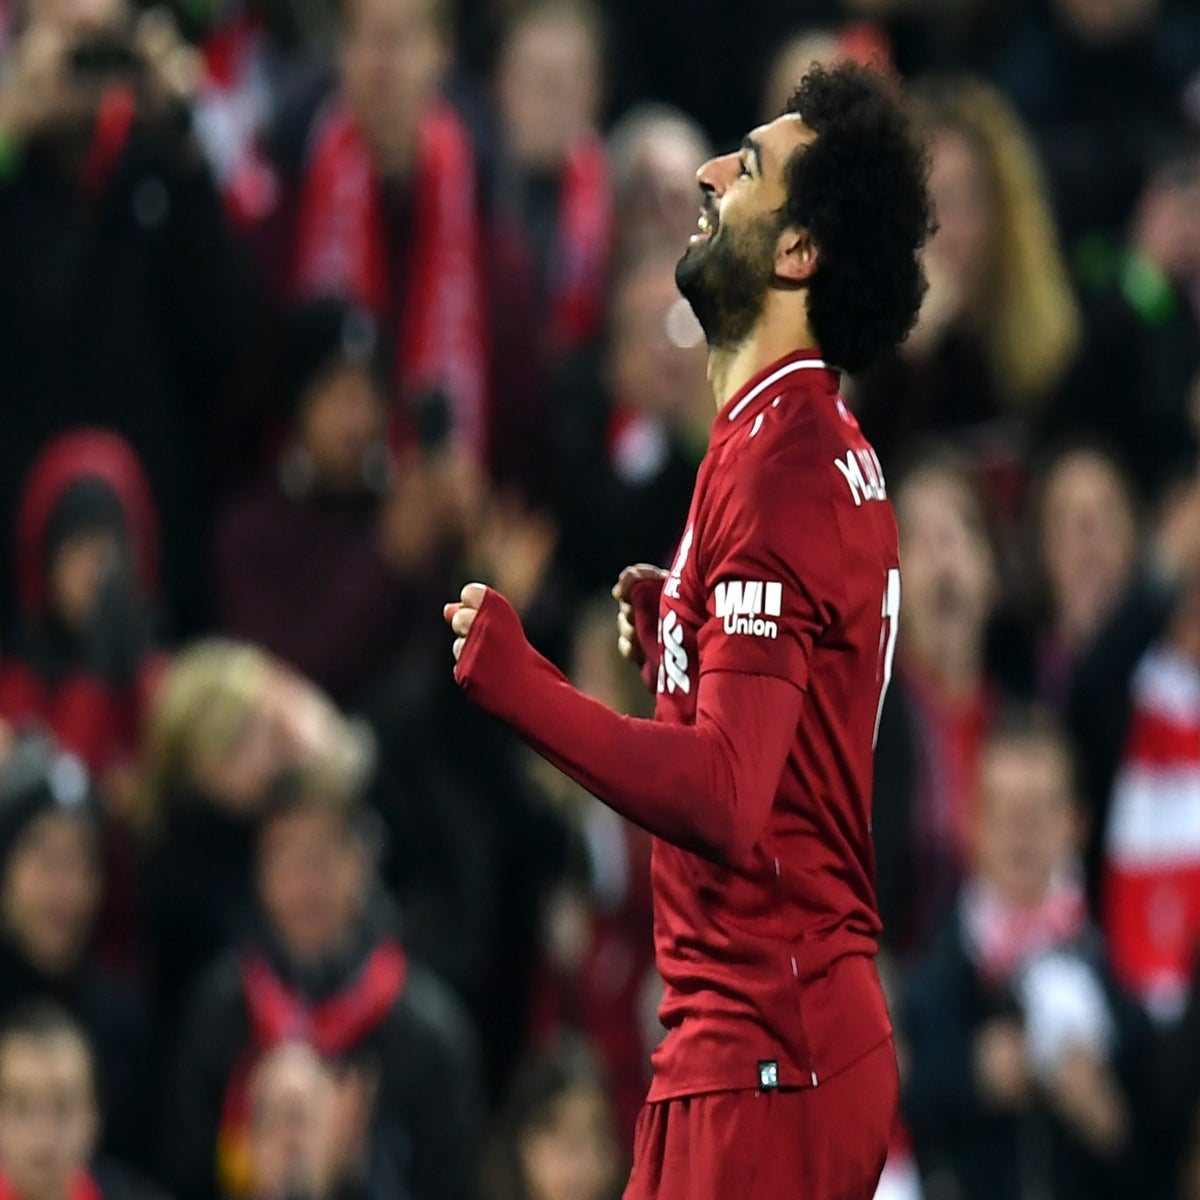 Mohamed Salah desativa conta no Twitter após post misterioso - Monet